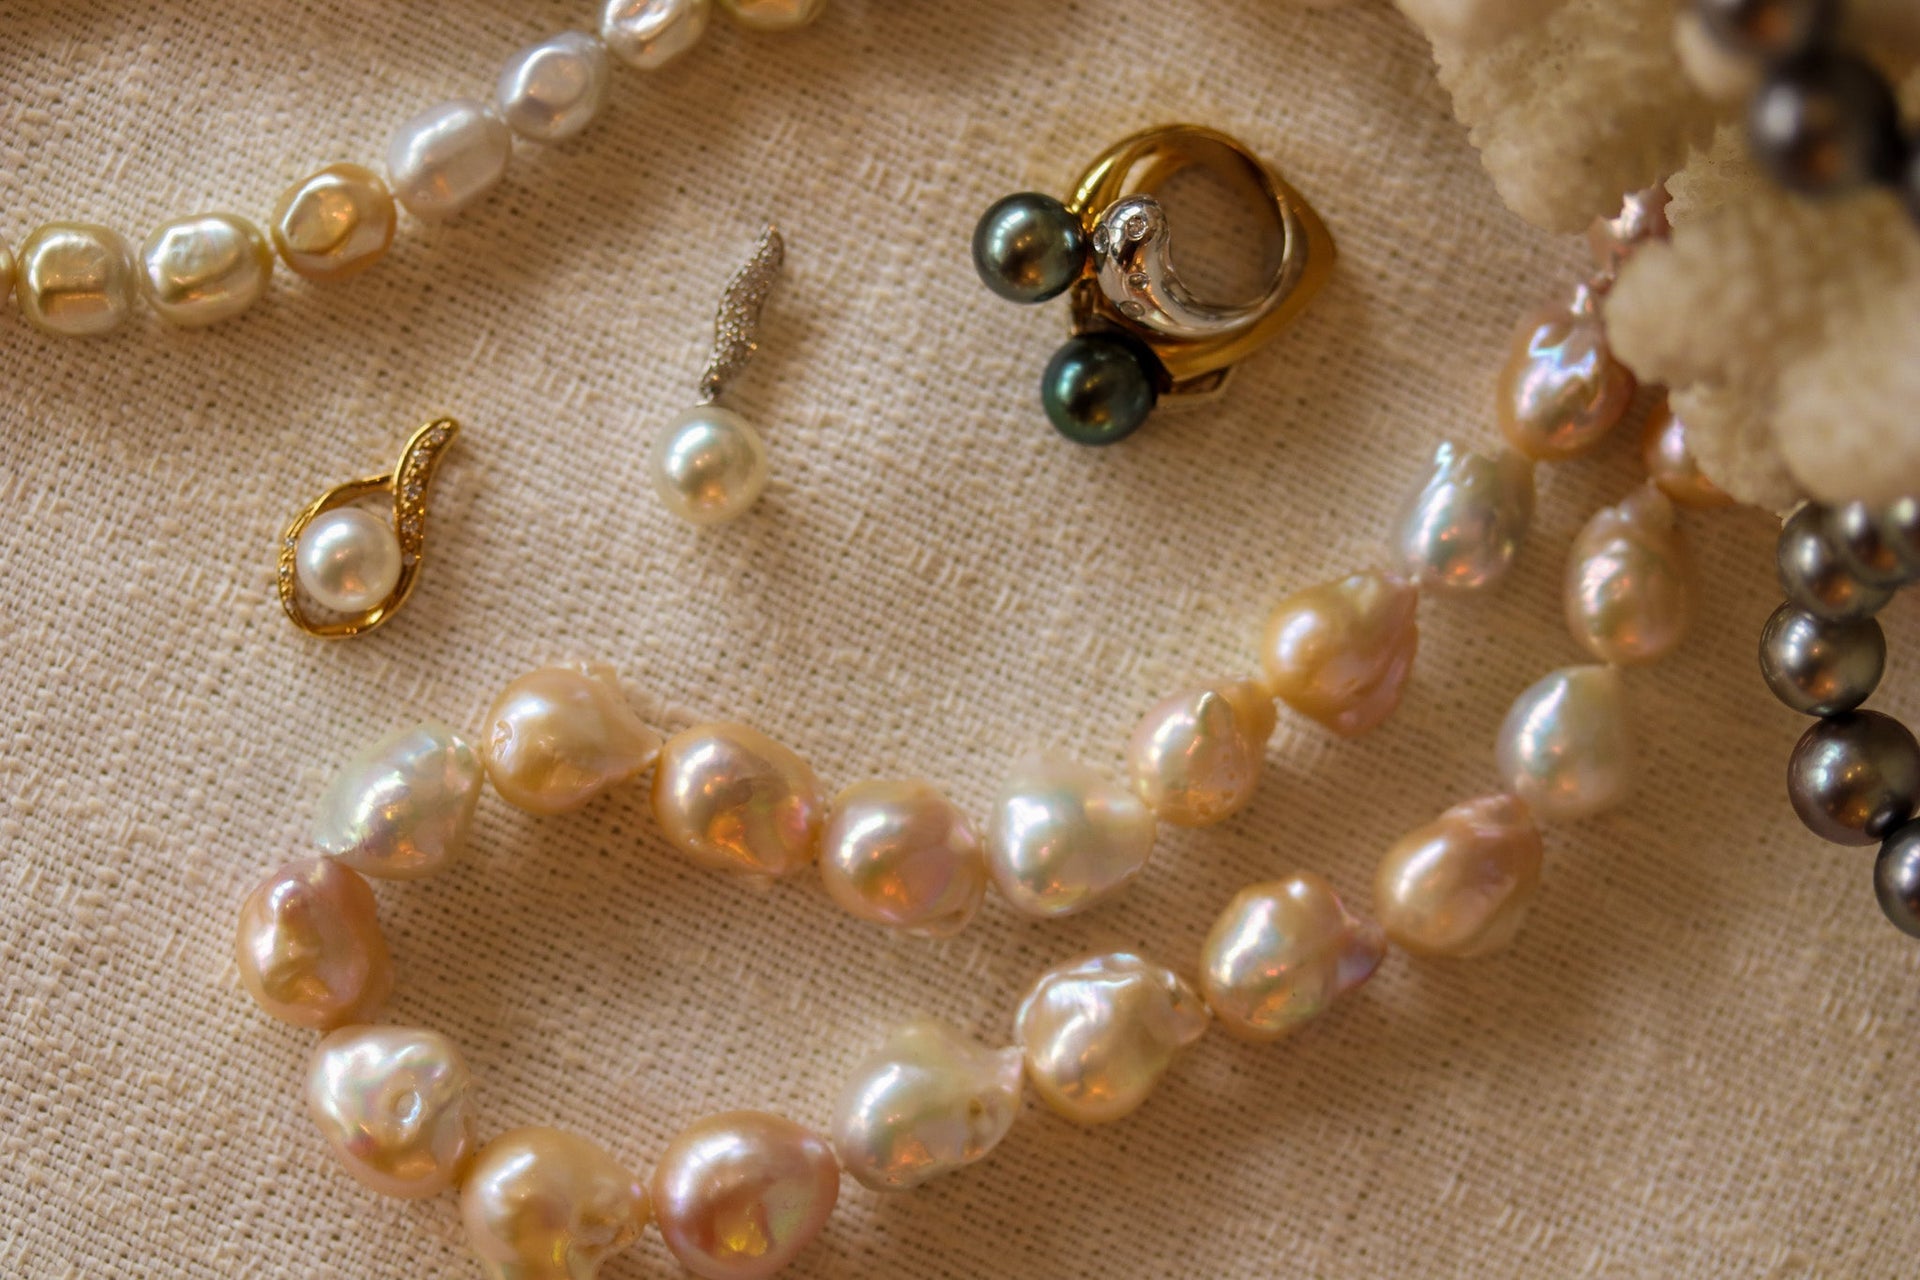 Pearls of the Sea - Kingdom Jewelry